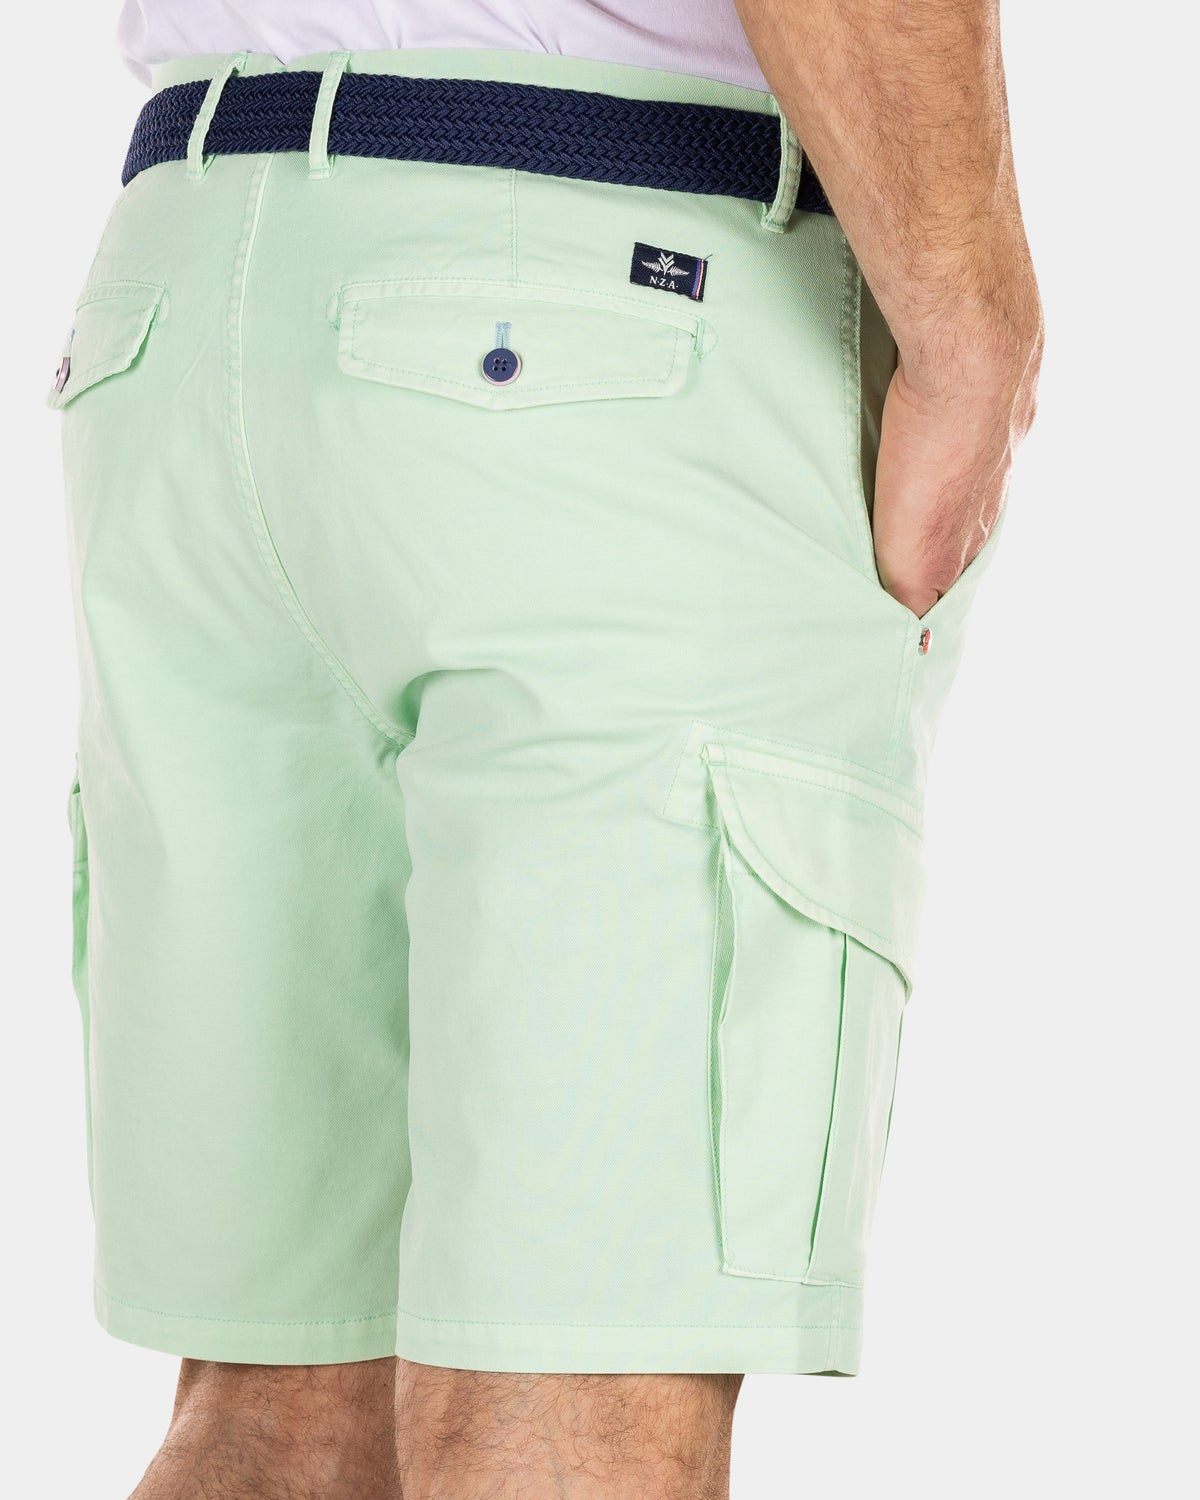 Plain shorts - Teal Green